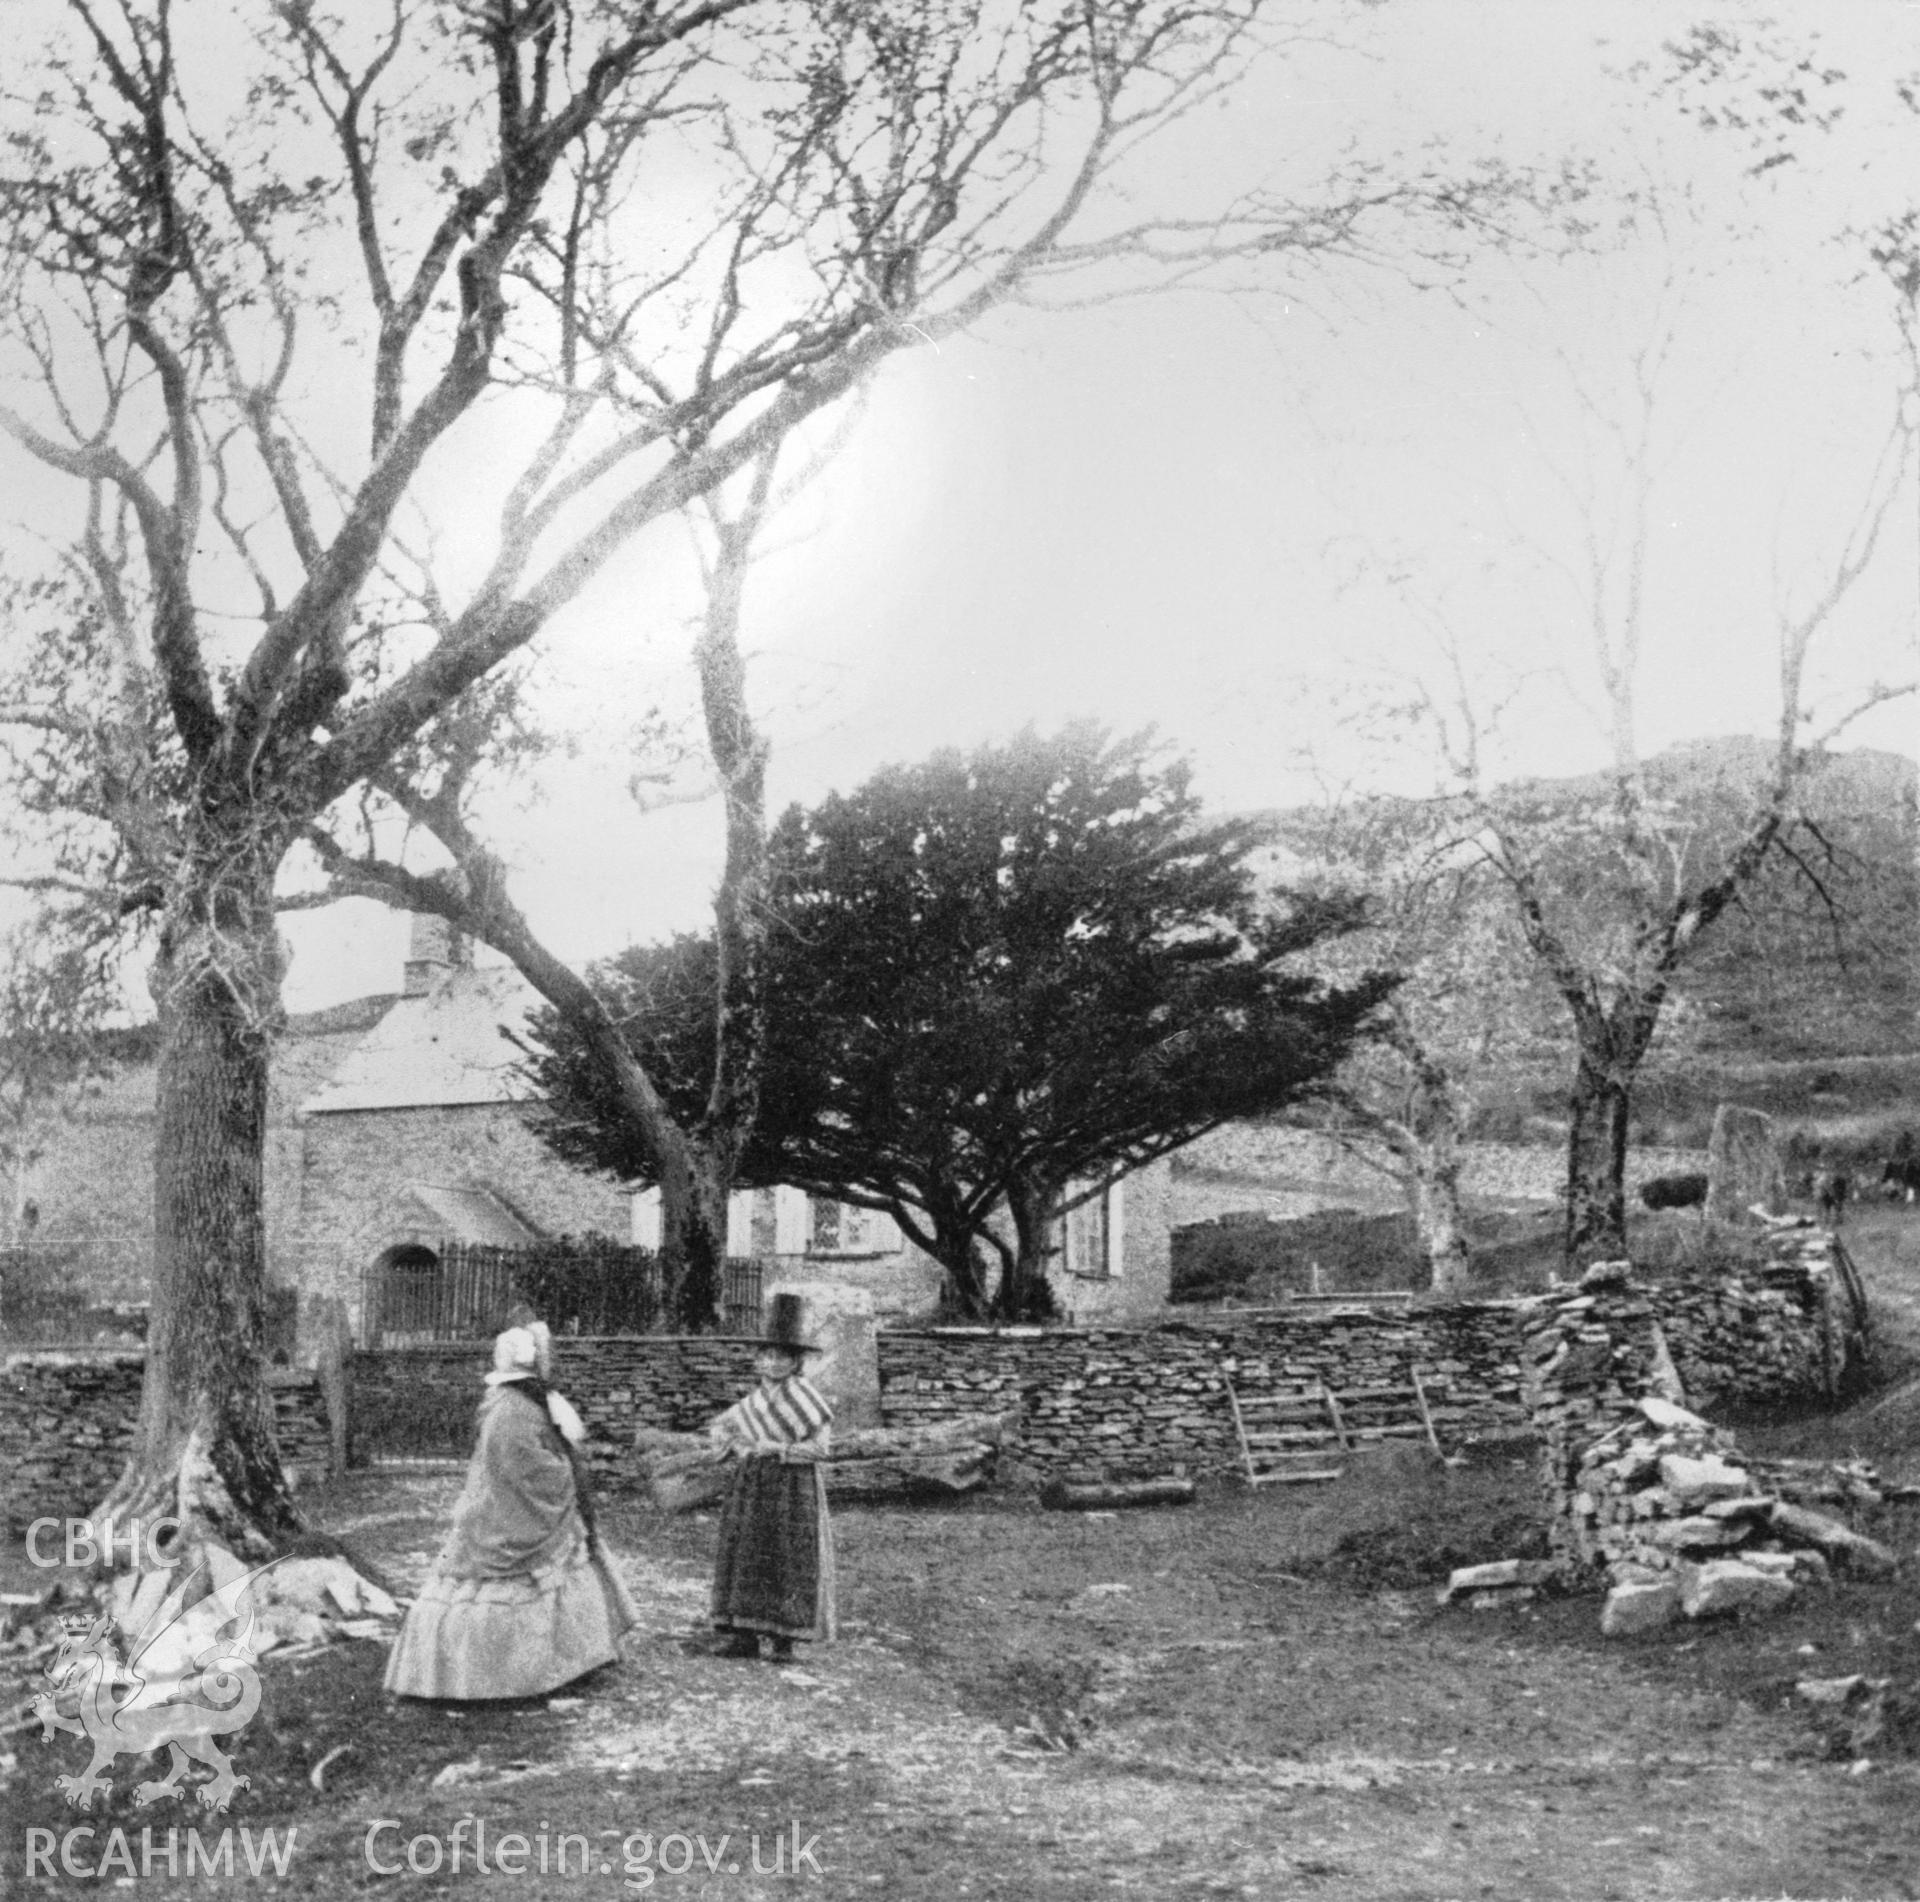 A black and white photo of St John's Church, Ysbytty Cynfyn.